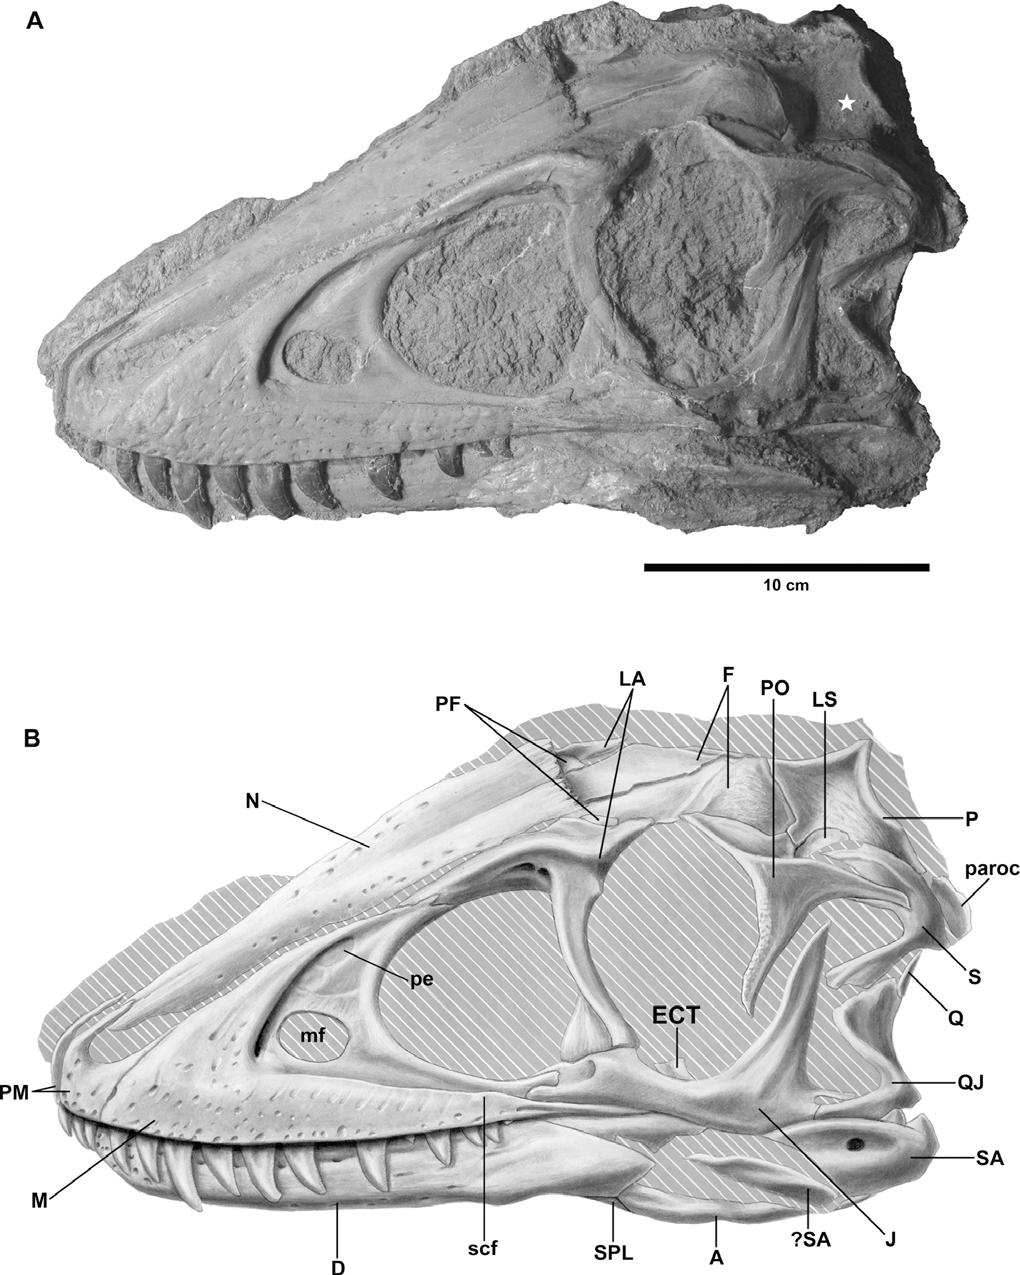 TSUIHIJI ET AL. SKULL OF A JUVENILE TARBOSAURUS 3 FIGURE 2. Skull of a juvenile Tarbosaurus bataar (MPC-D 107/7) in left lateral view.